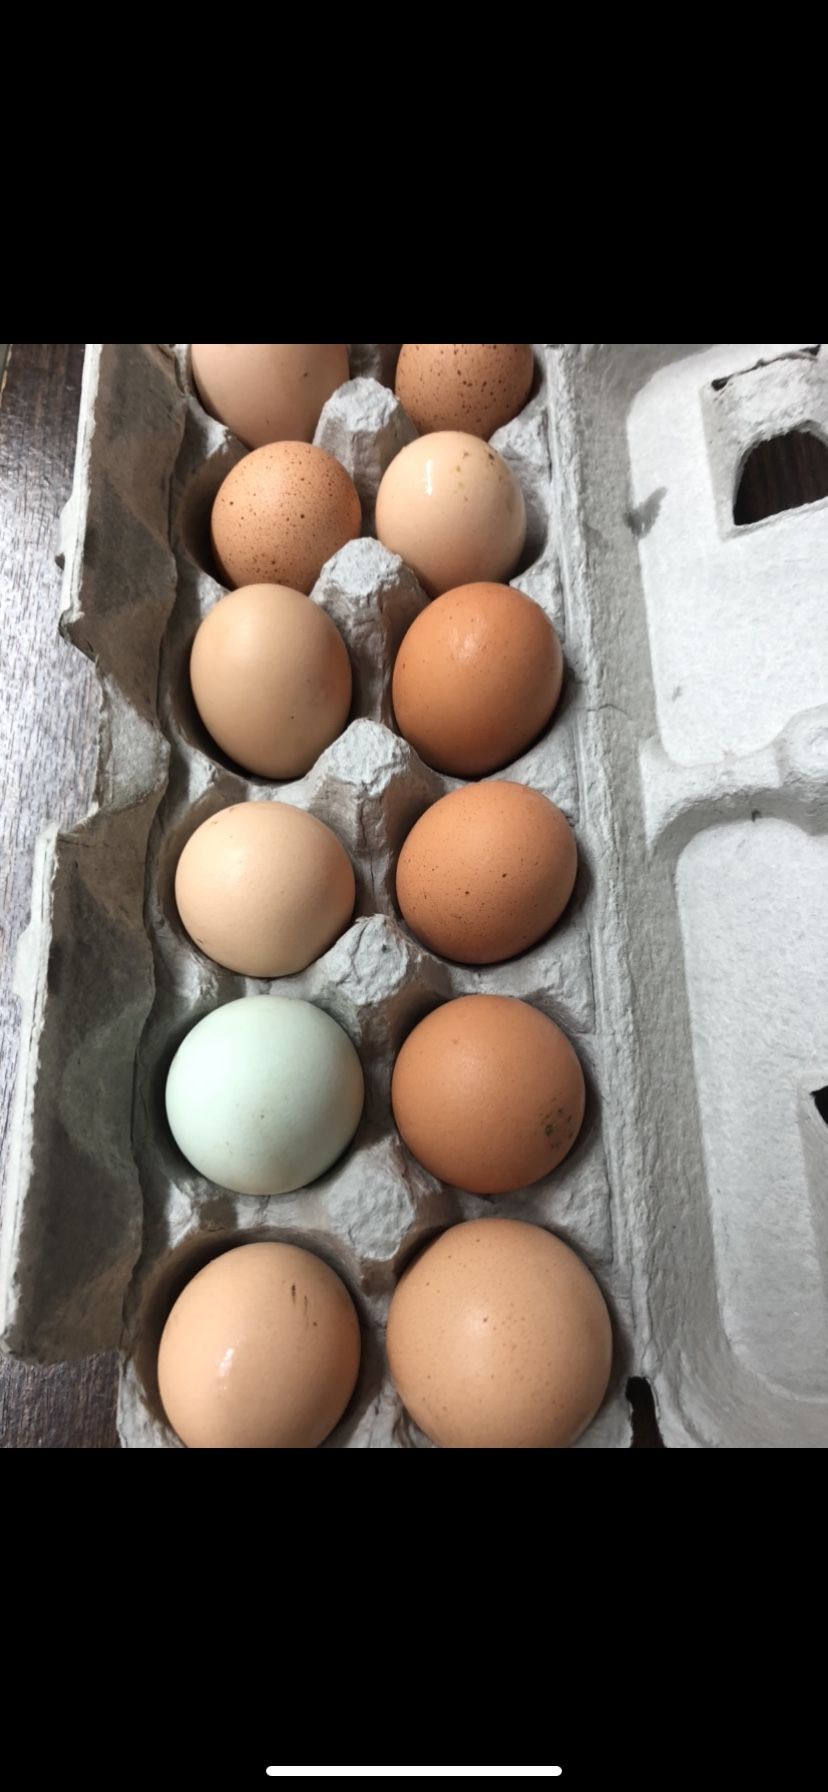 Organic Free Range Eggs Available!